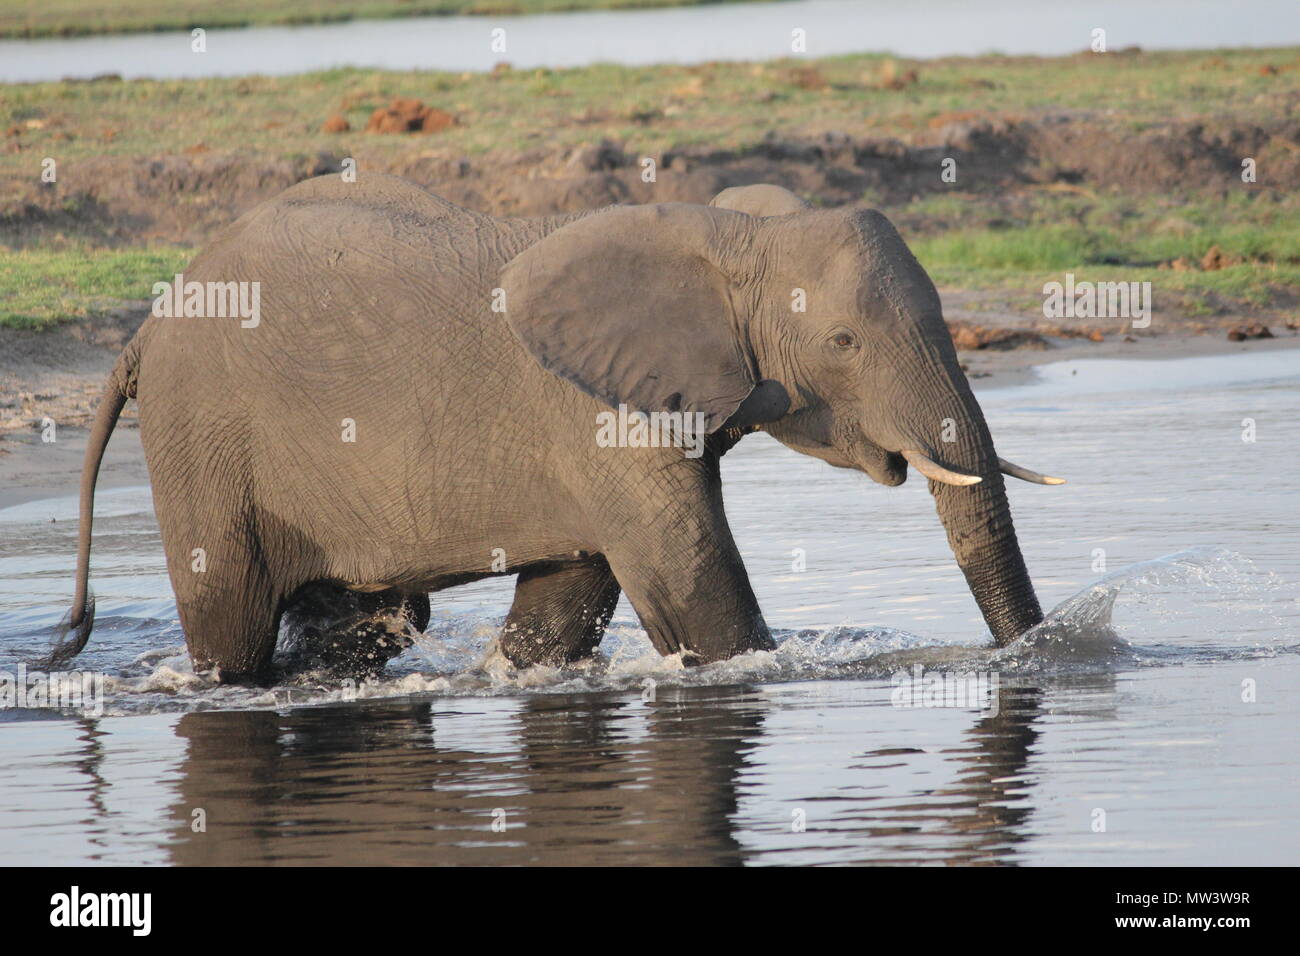 Cruzando el agua elefante Foto de stock